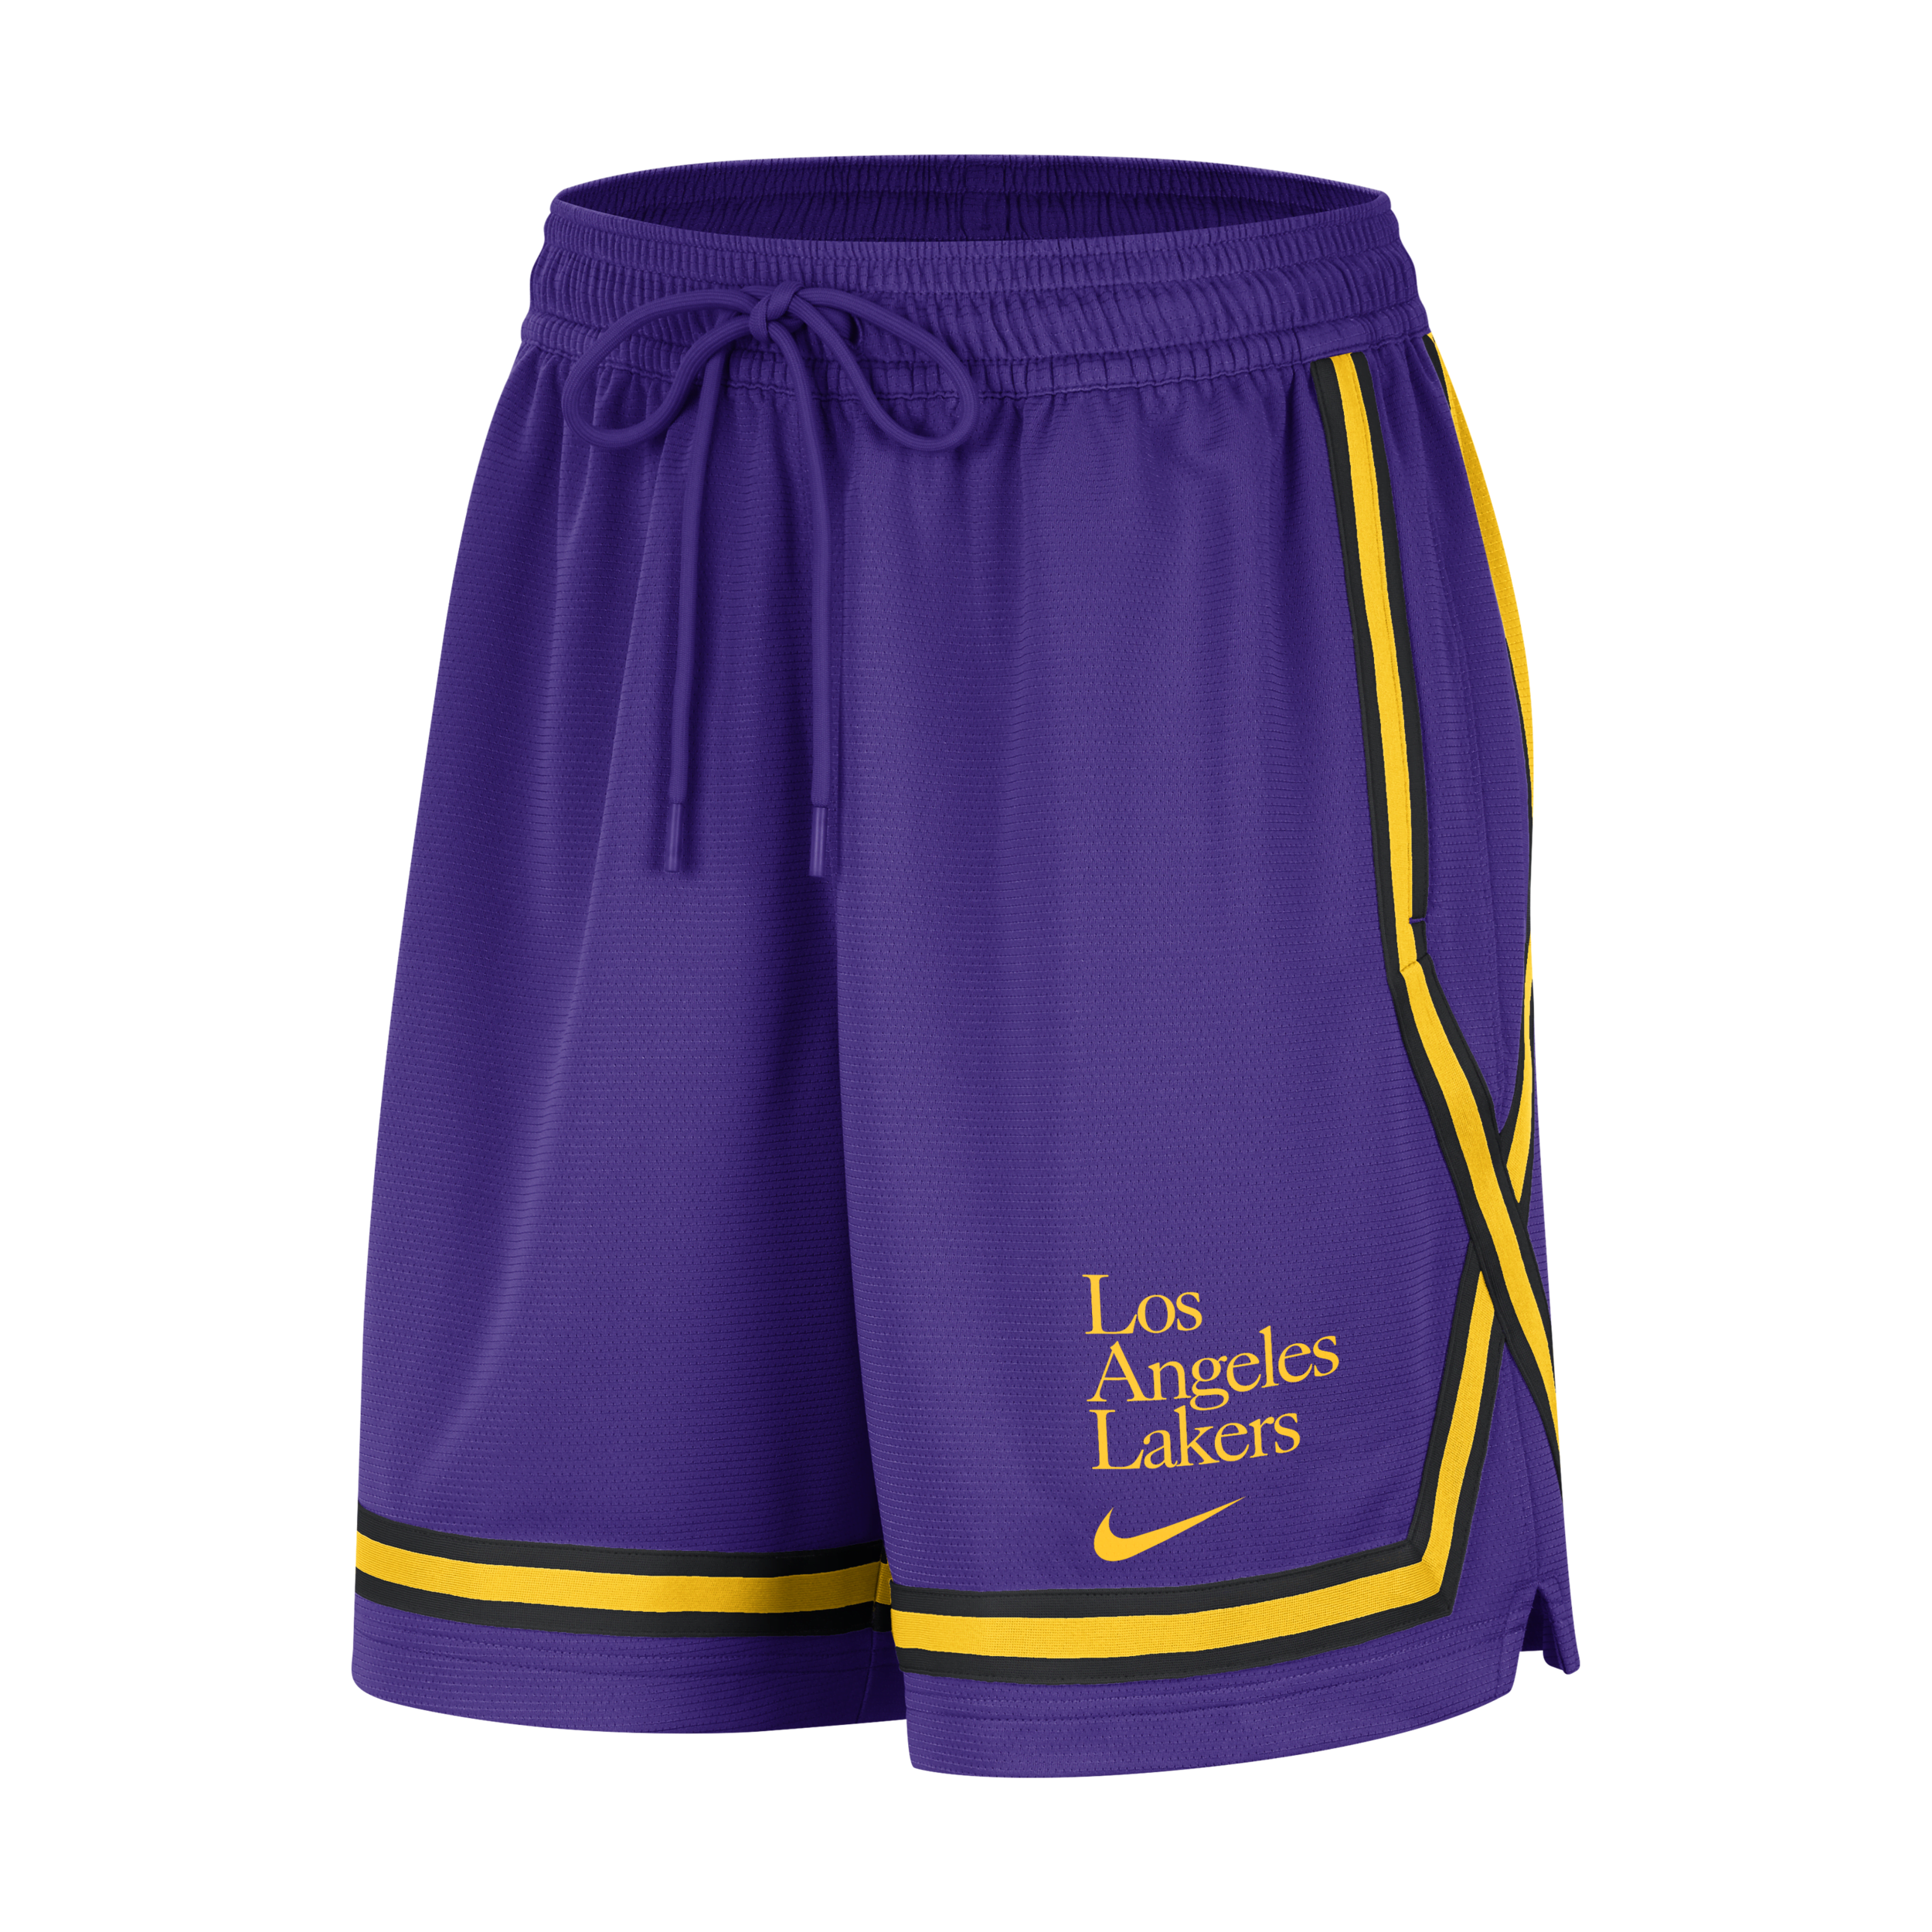 Los Angeles Lakers Fly Crossover Nike Dri-FIT NBA-basketballshorts med grafik til kvinder - lilla